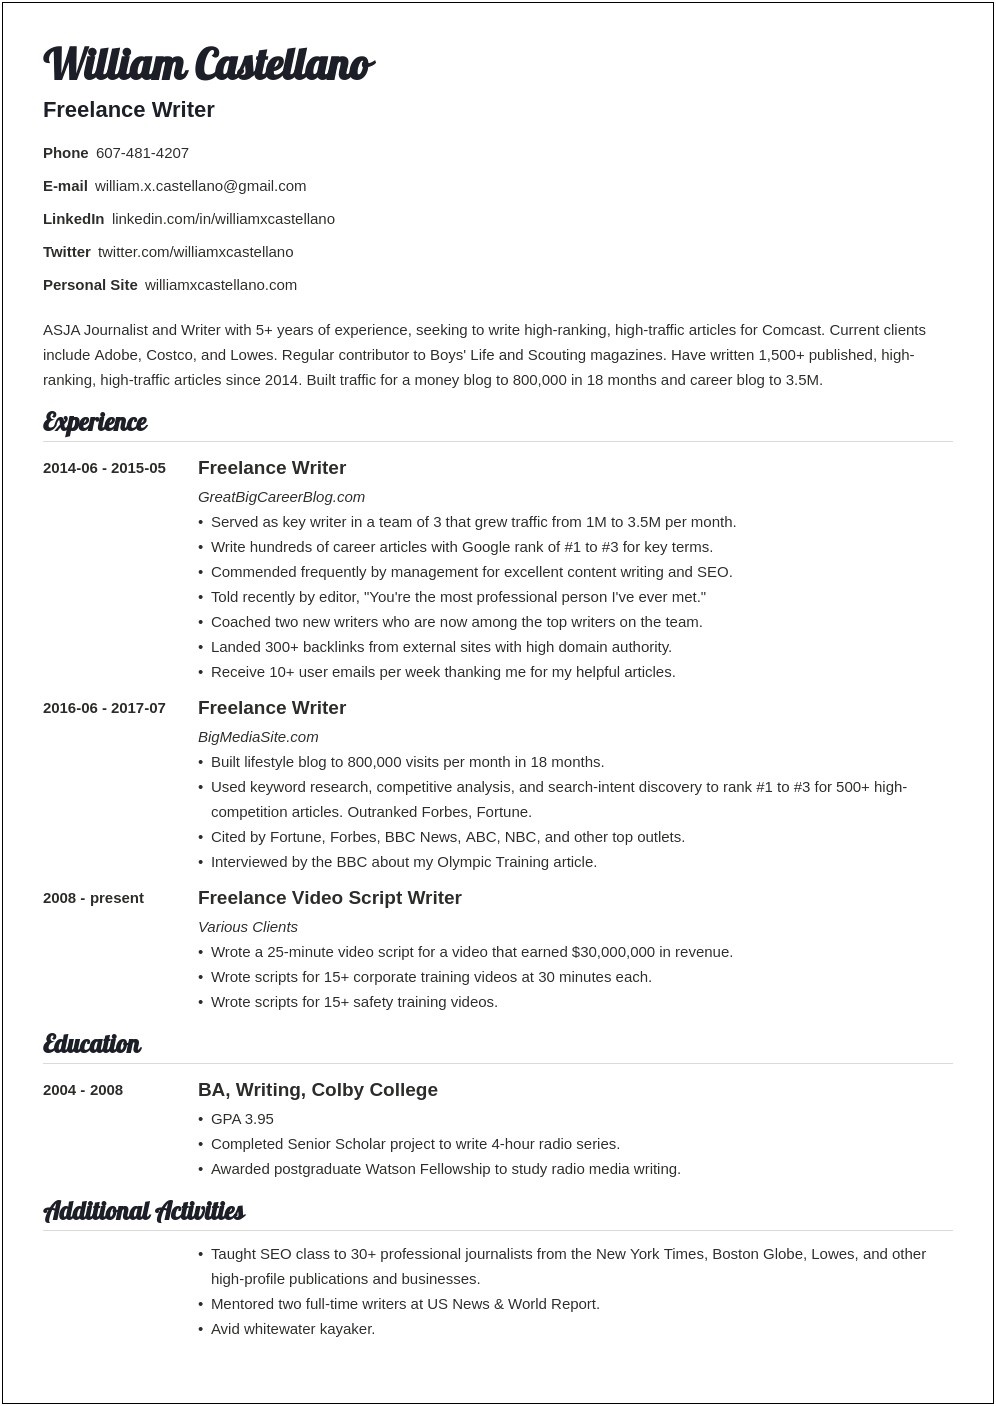 Lowes Customer Service Job Description For Resume